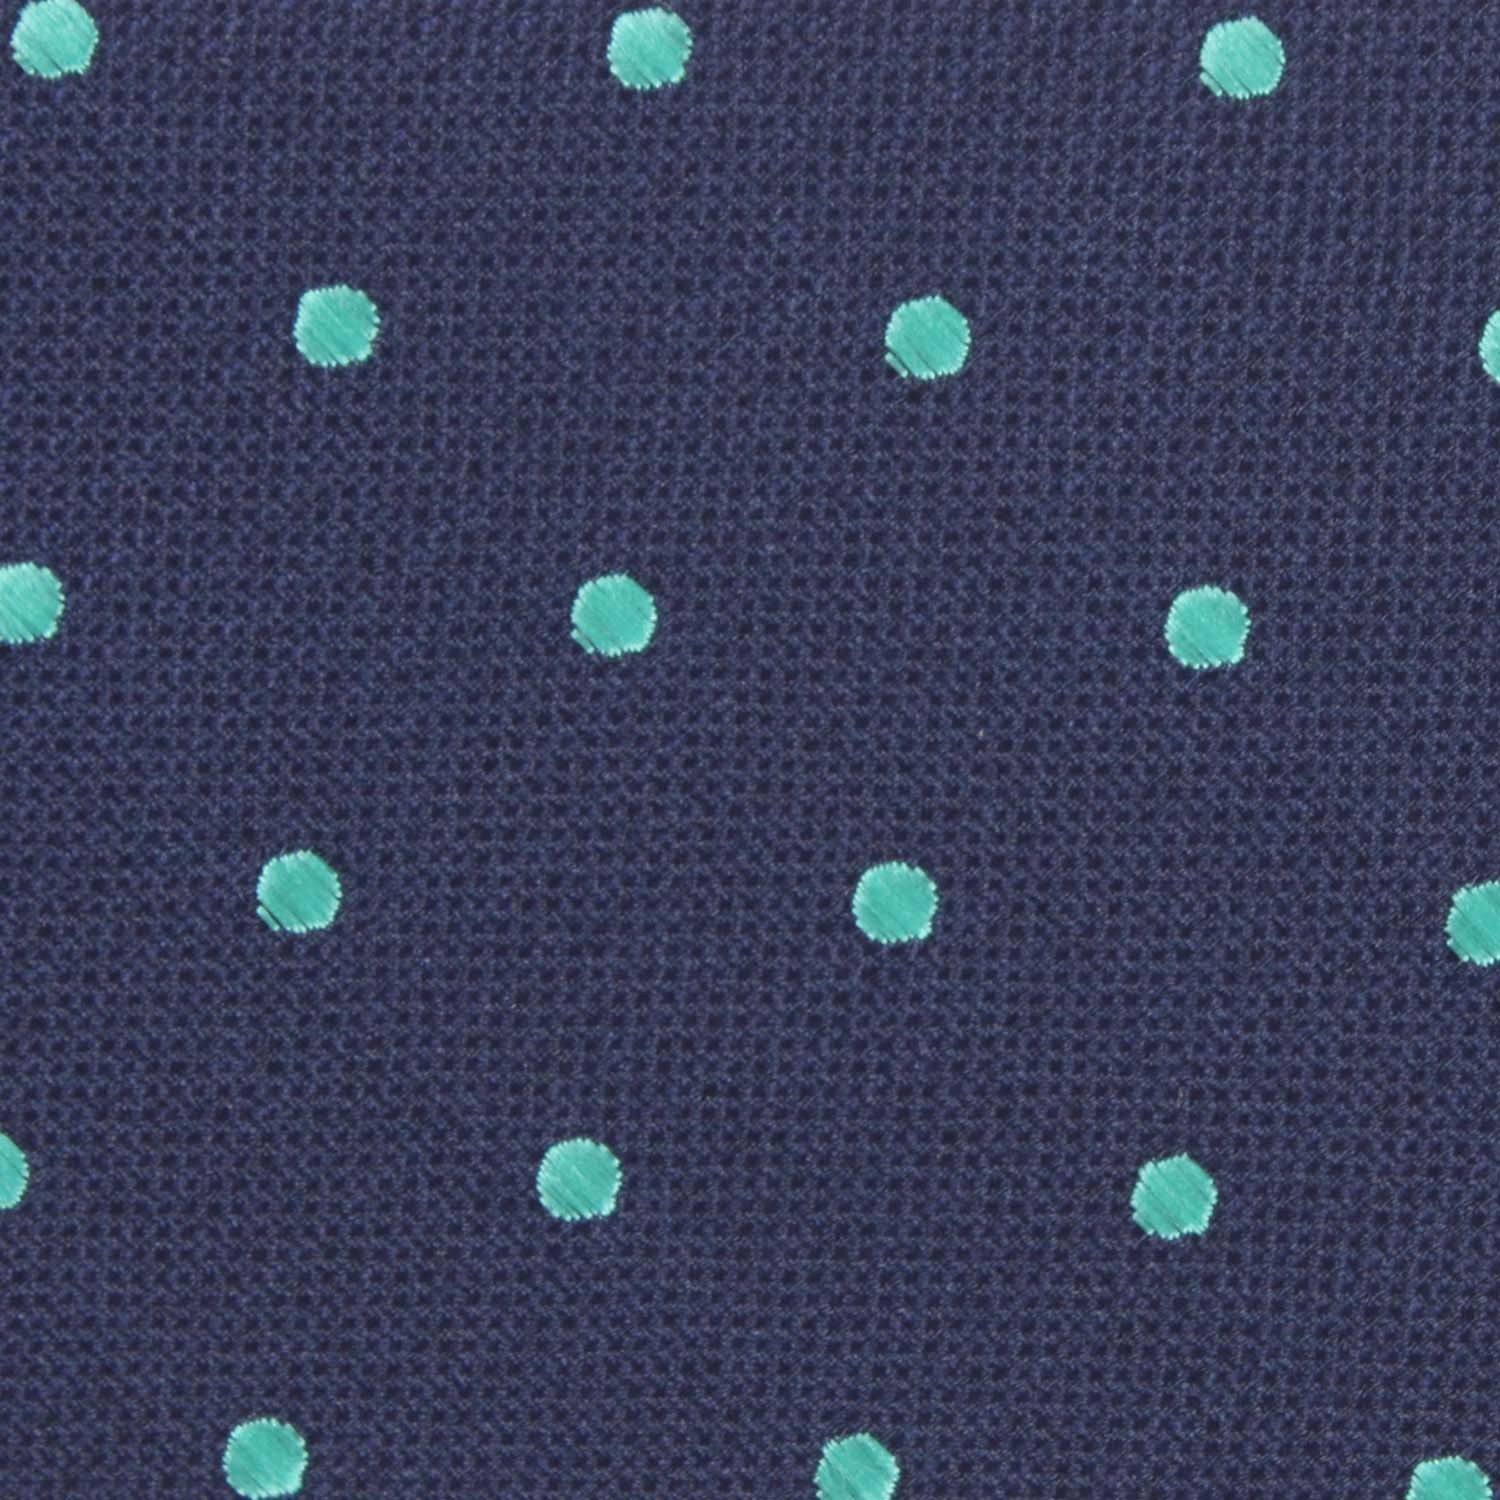 Navy Blue with Mint Green Polka Dots Fabric Self Tie Diamond Tip Bow TieM126